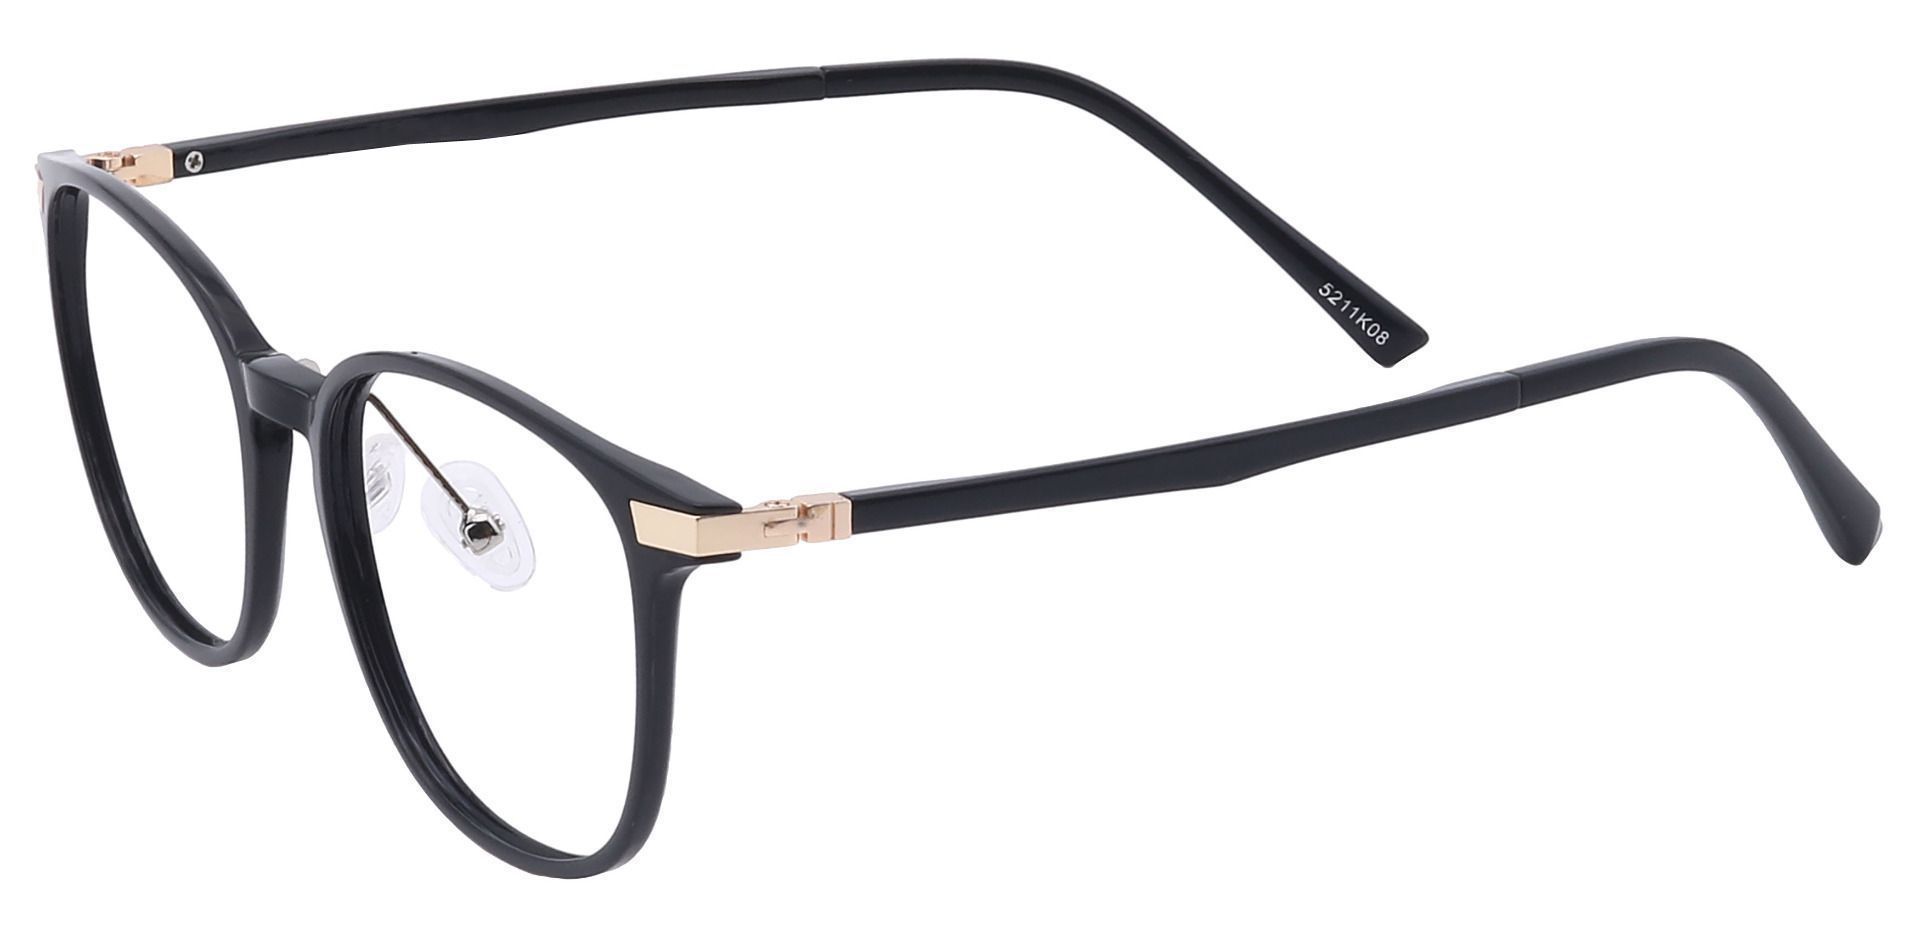 Walker Oval Prescription Glasses - Black